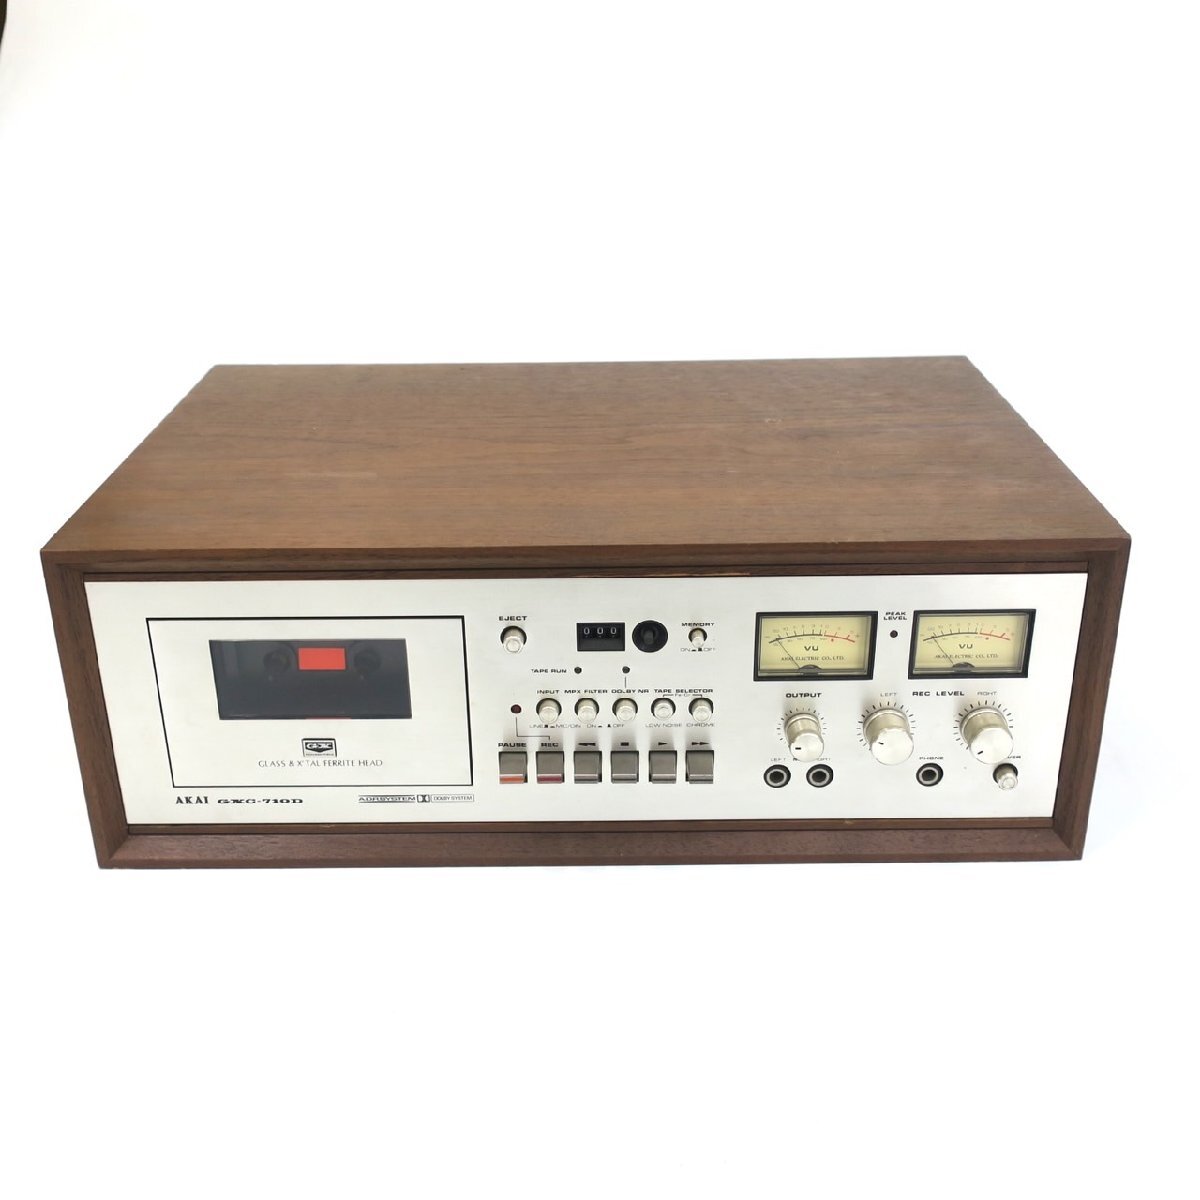 1 jpy start AKAI Akai GXC-710D stereo cassette deck audio sound equipment AV equipment Showa Retro consumer electronics electrification has confirmed 